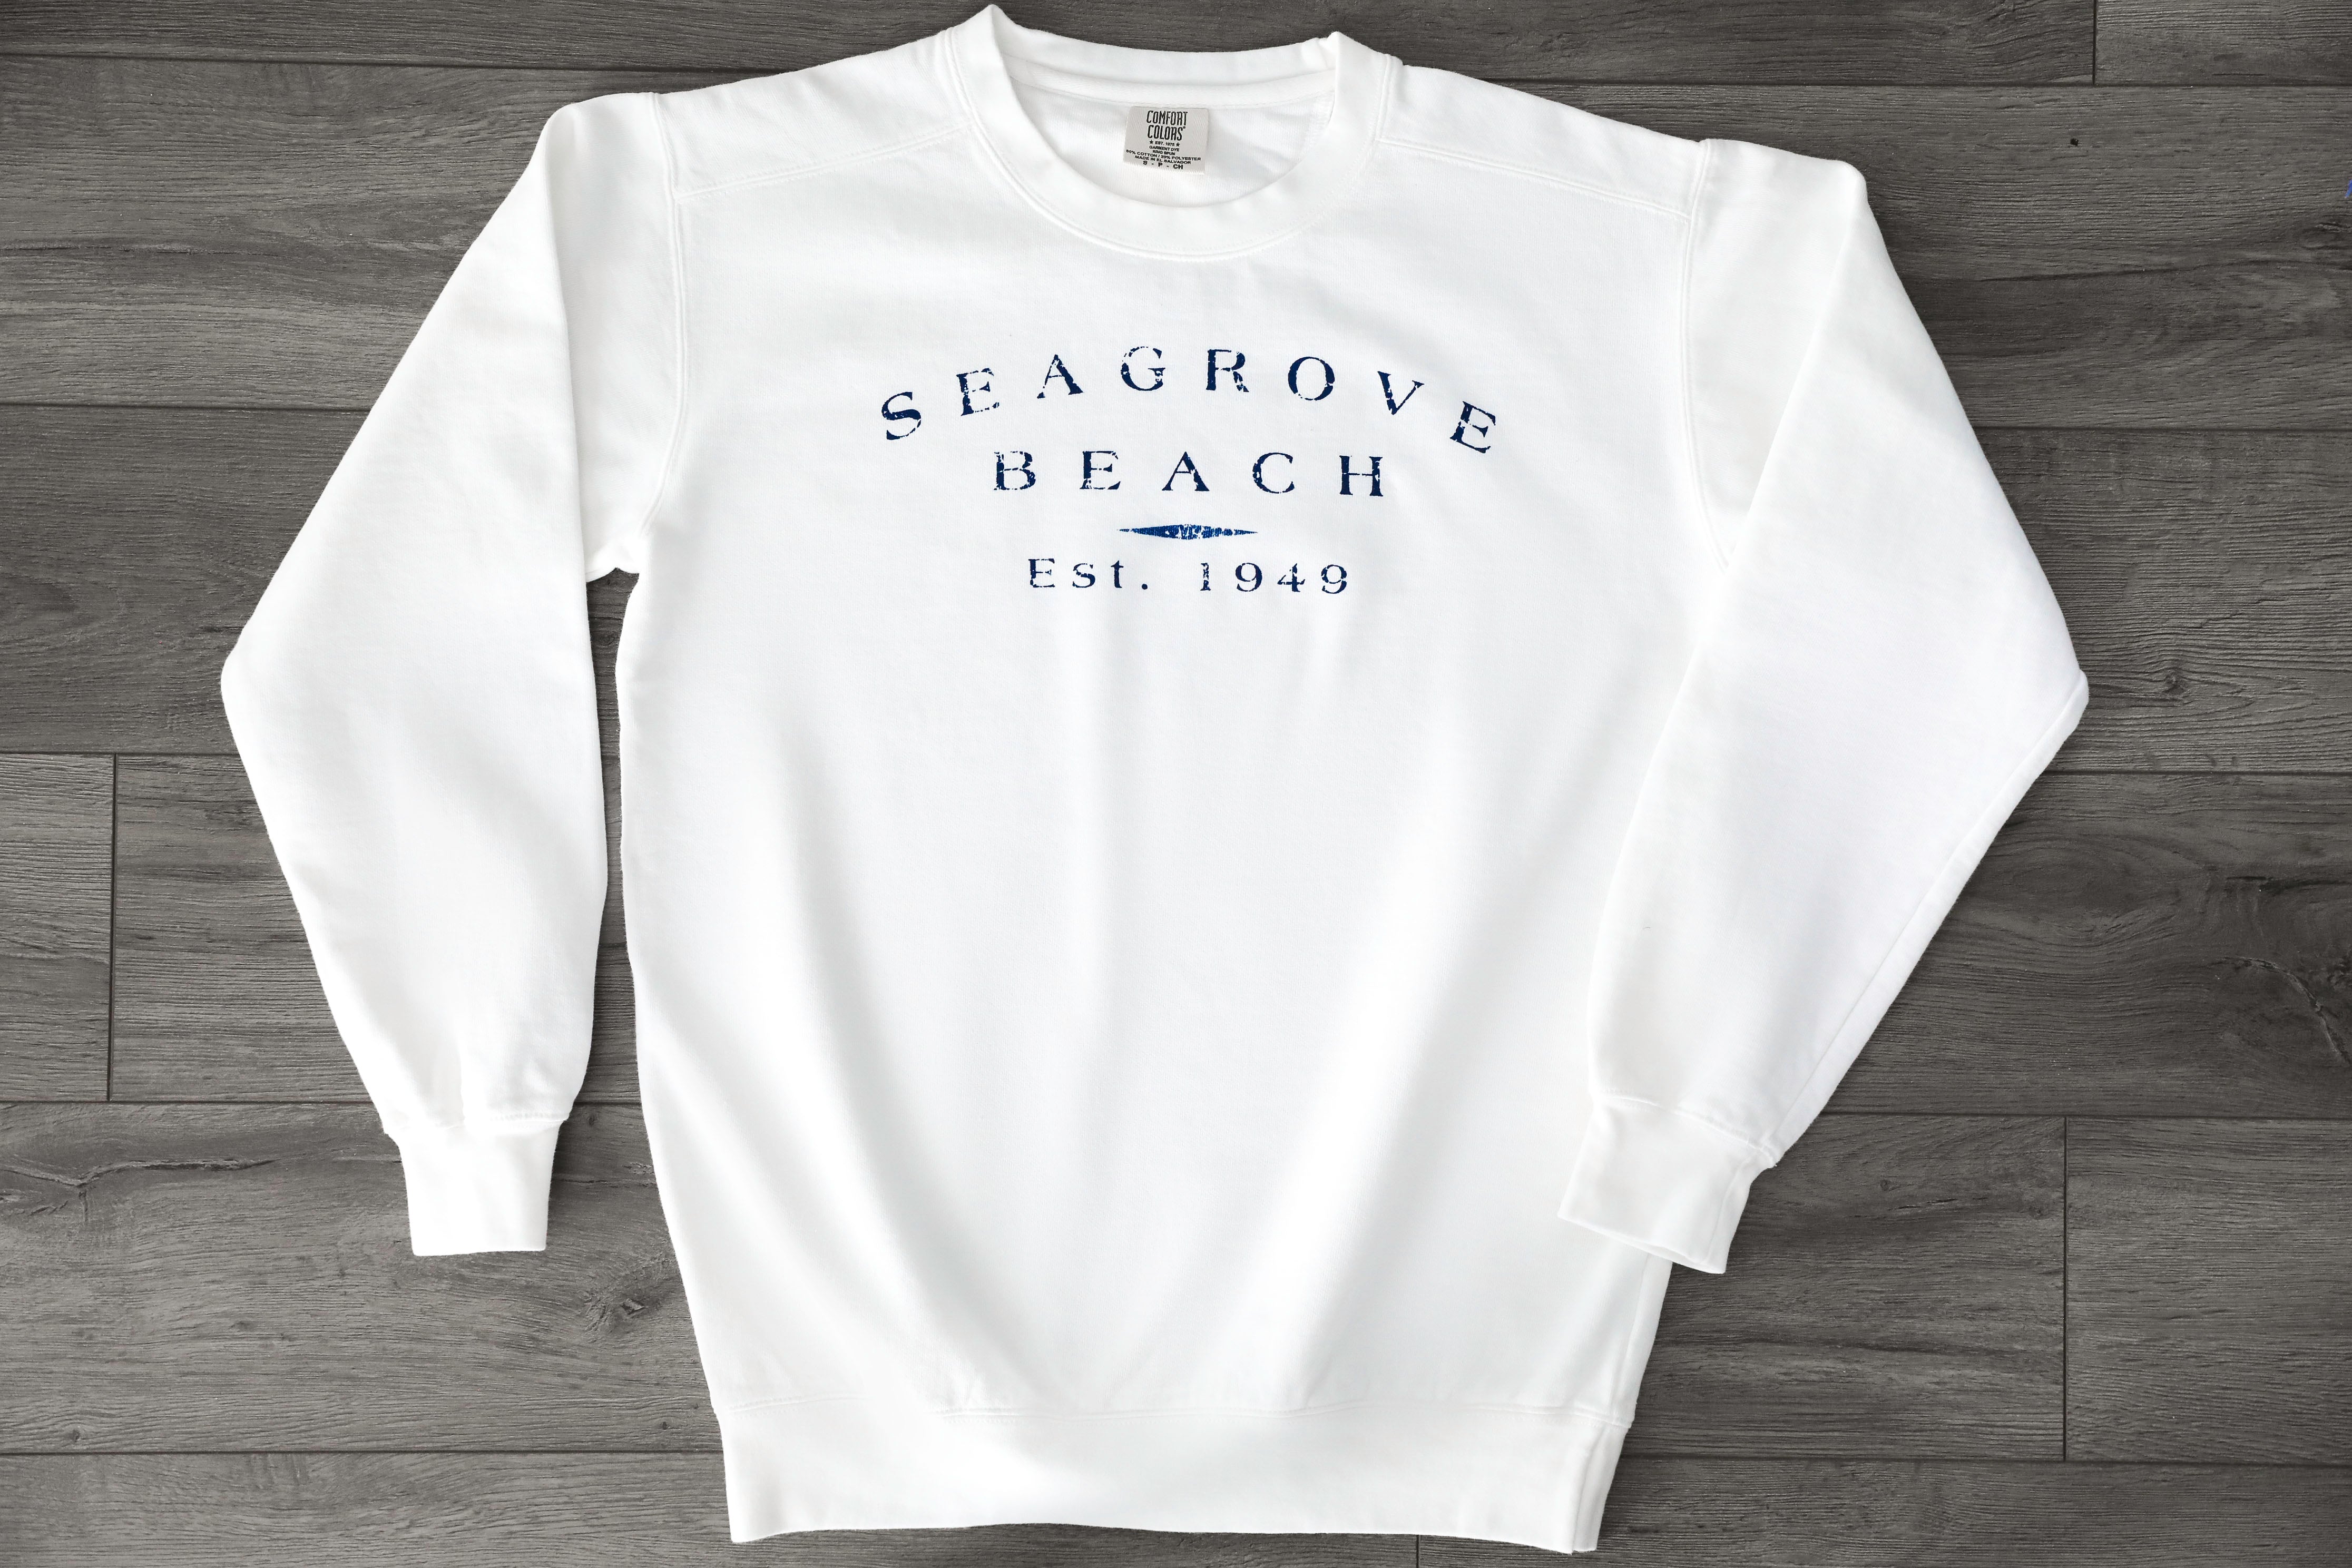 Seagrove Beach Est. Sweatshirt White